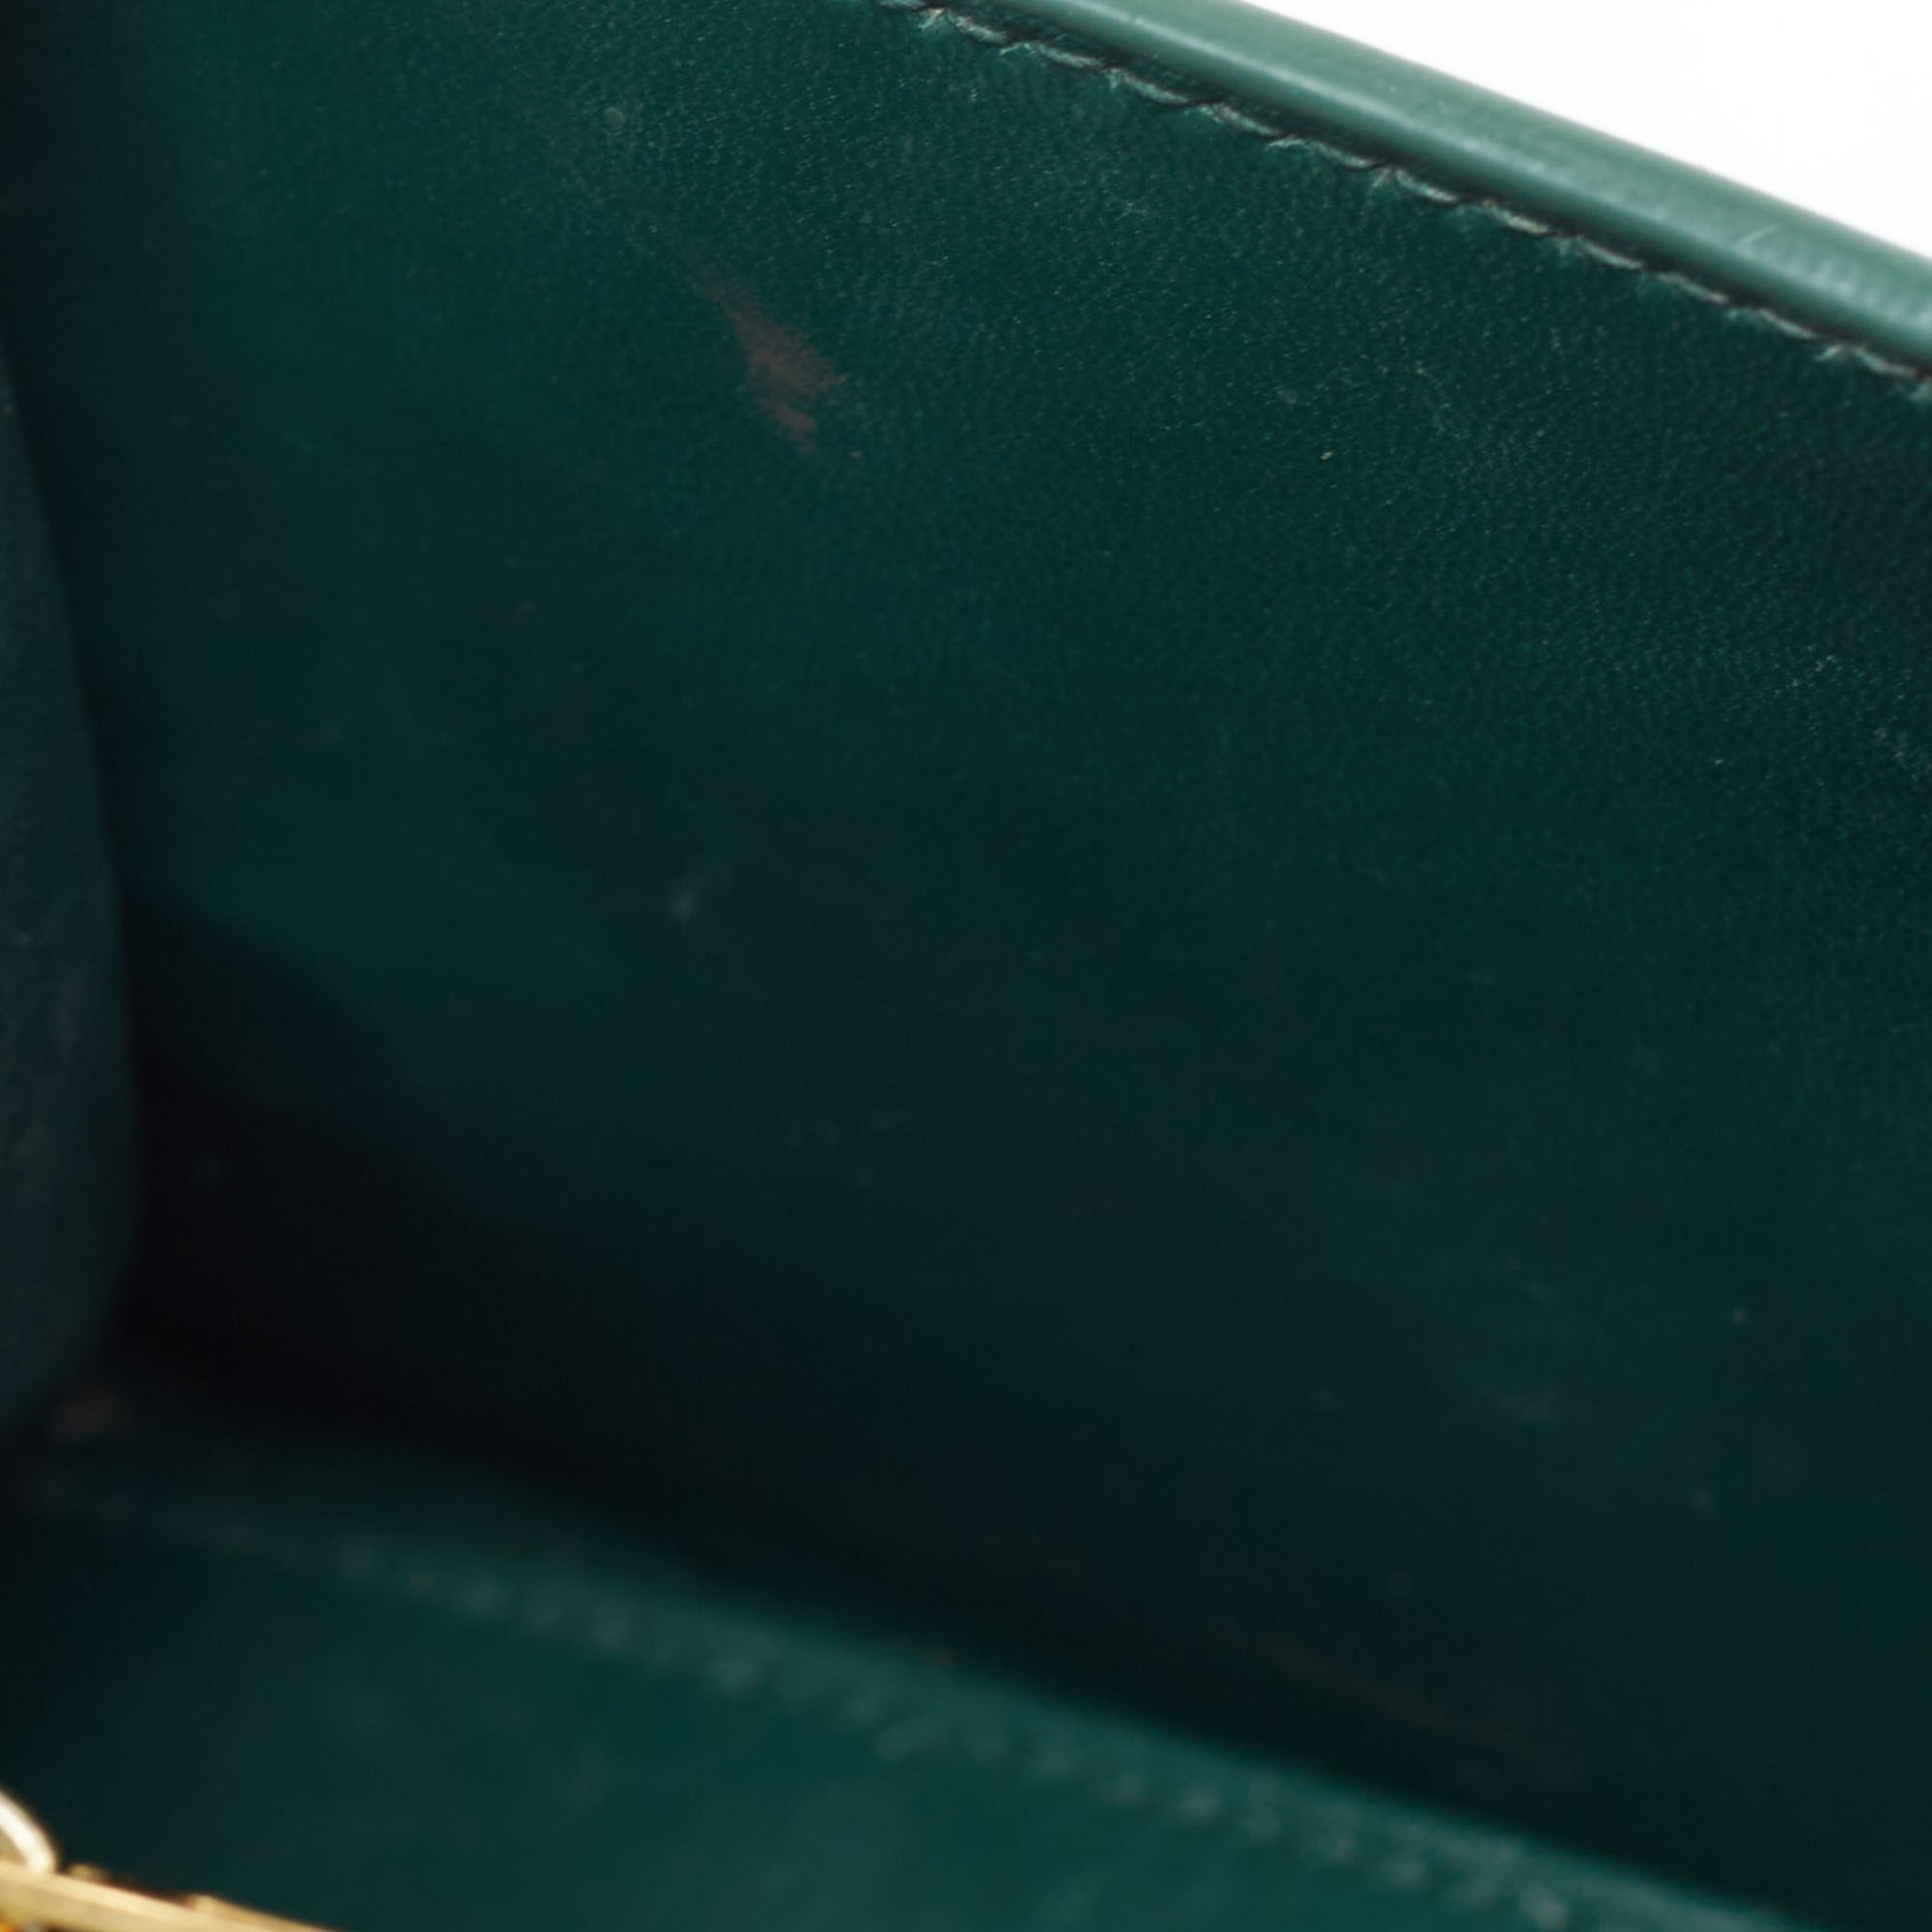 Balenciaga Green Croc Embossed Leather Small Hourglass Top Handle Bag